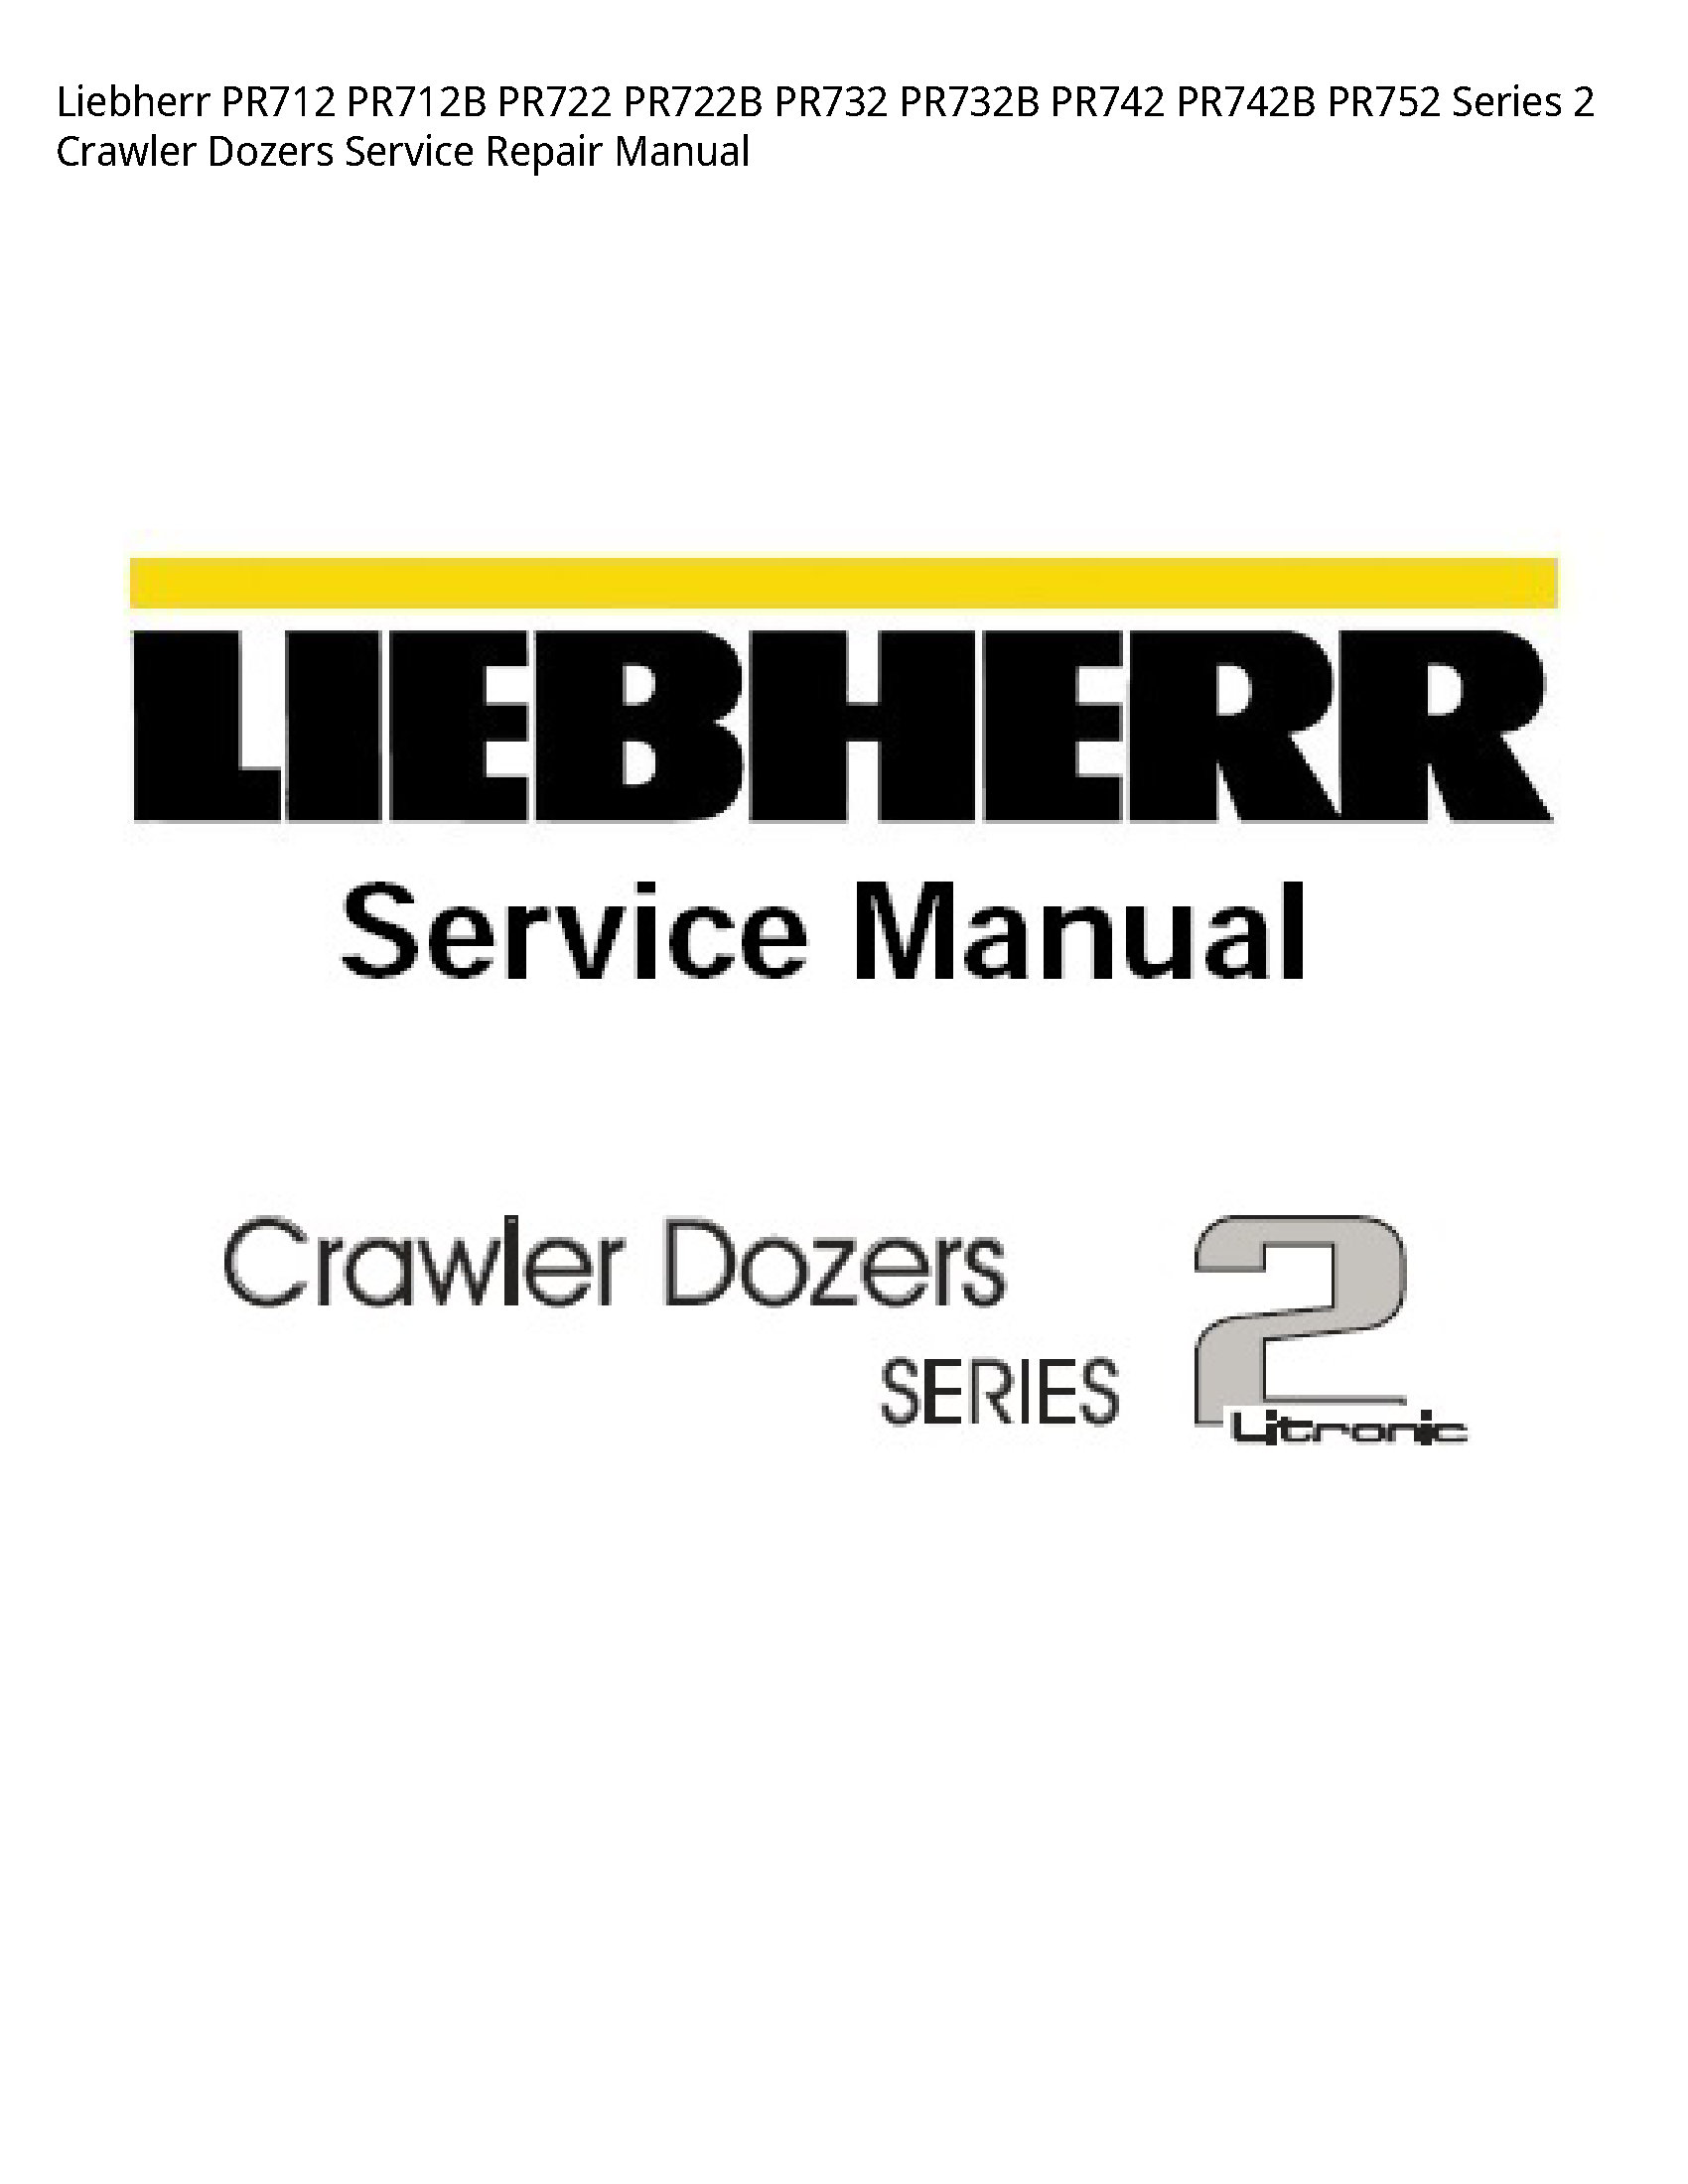 Liebherr PR712 Series Crawler Dozers manual